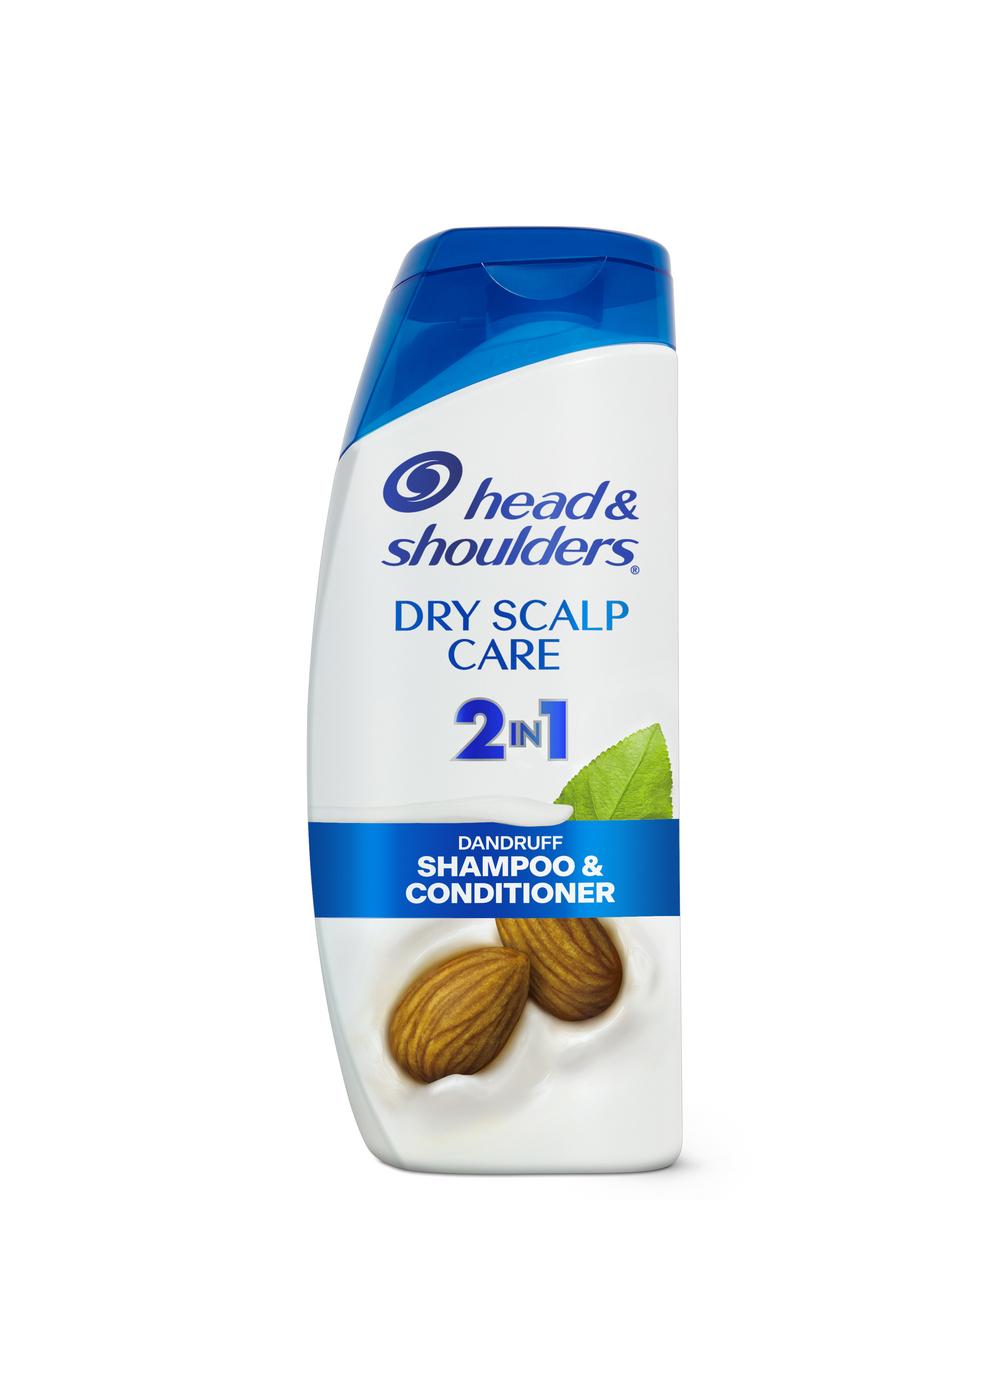 Head & Shoulders 2 in 1 Dandruff Shampoo + Conditioner - Dry Scalp Care; image 8 of 11